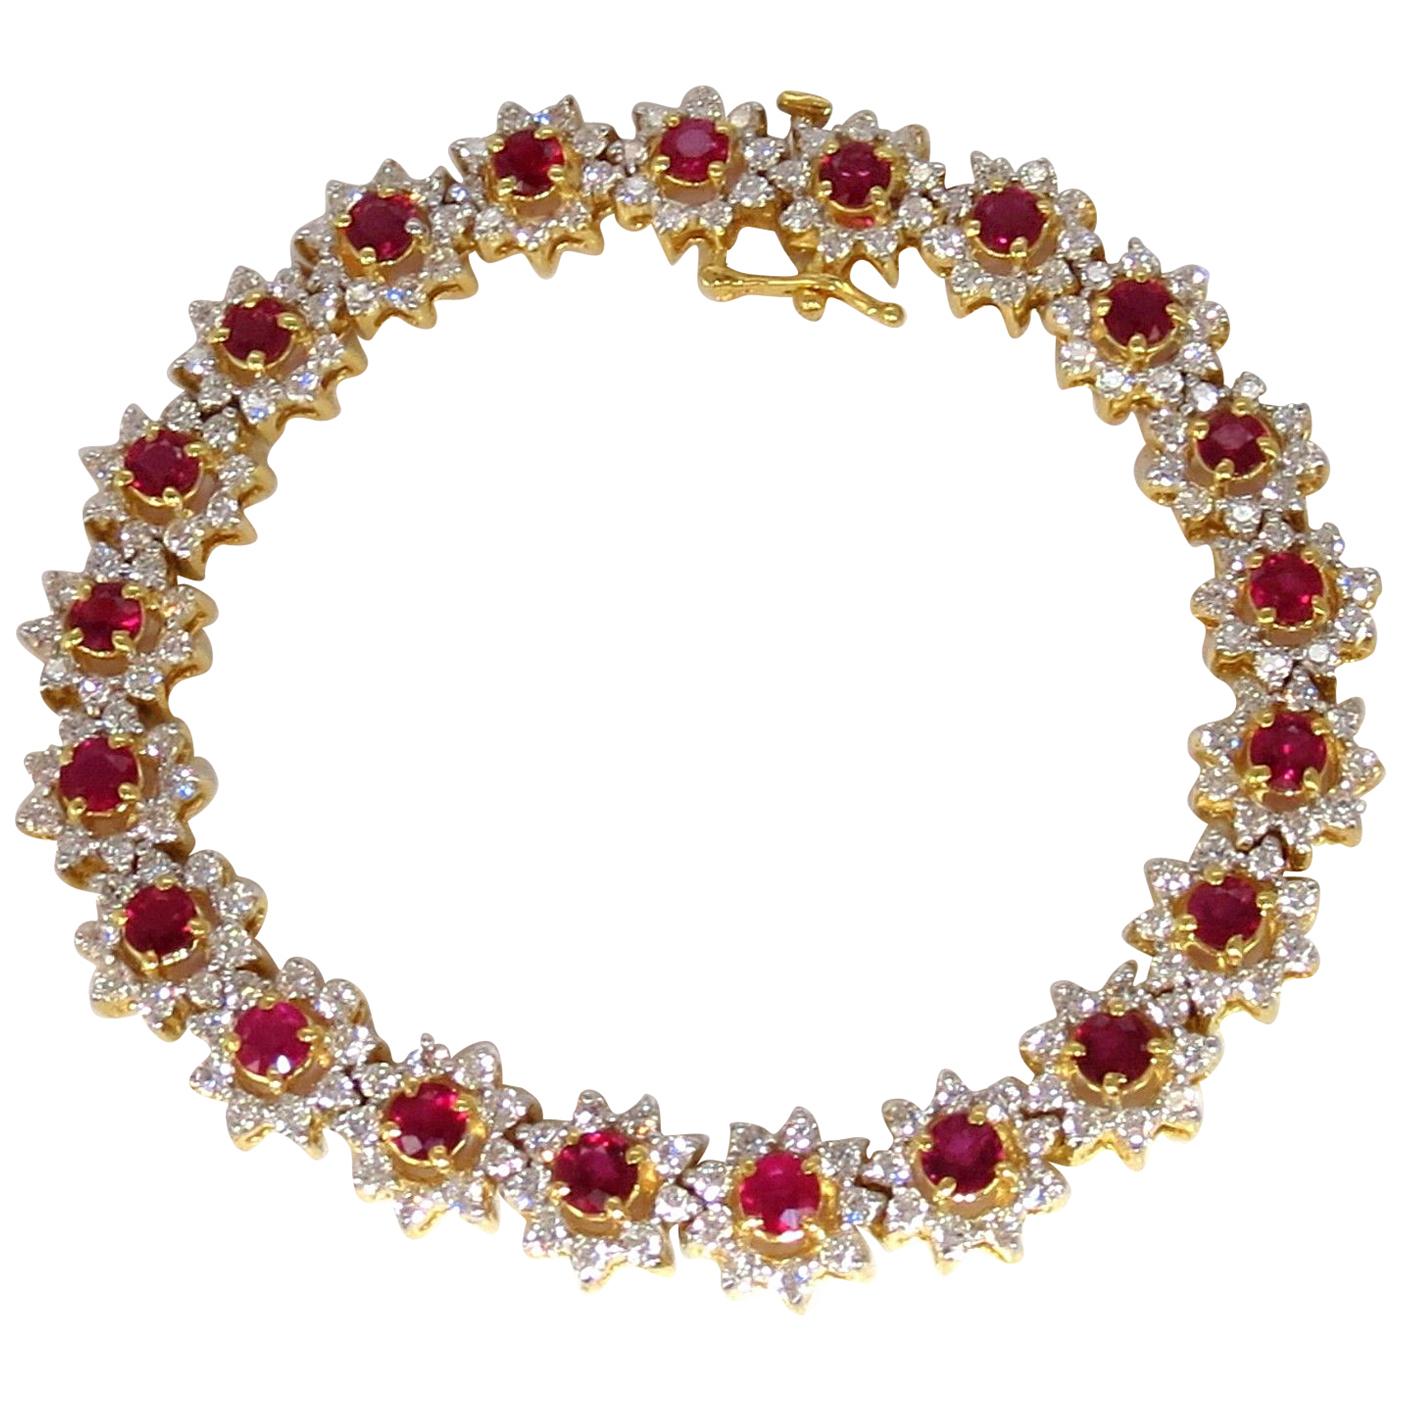 9.60 Carat Natural Bright Vivid Red Ruby Diamonds Clusters Tennis Bracelet